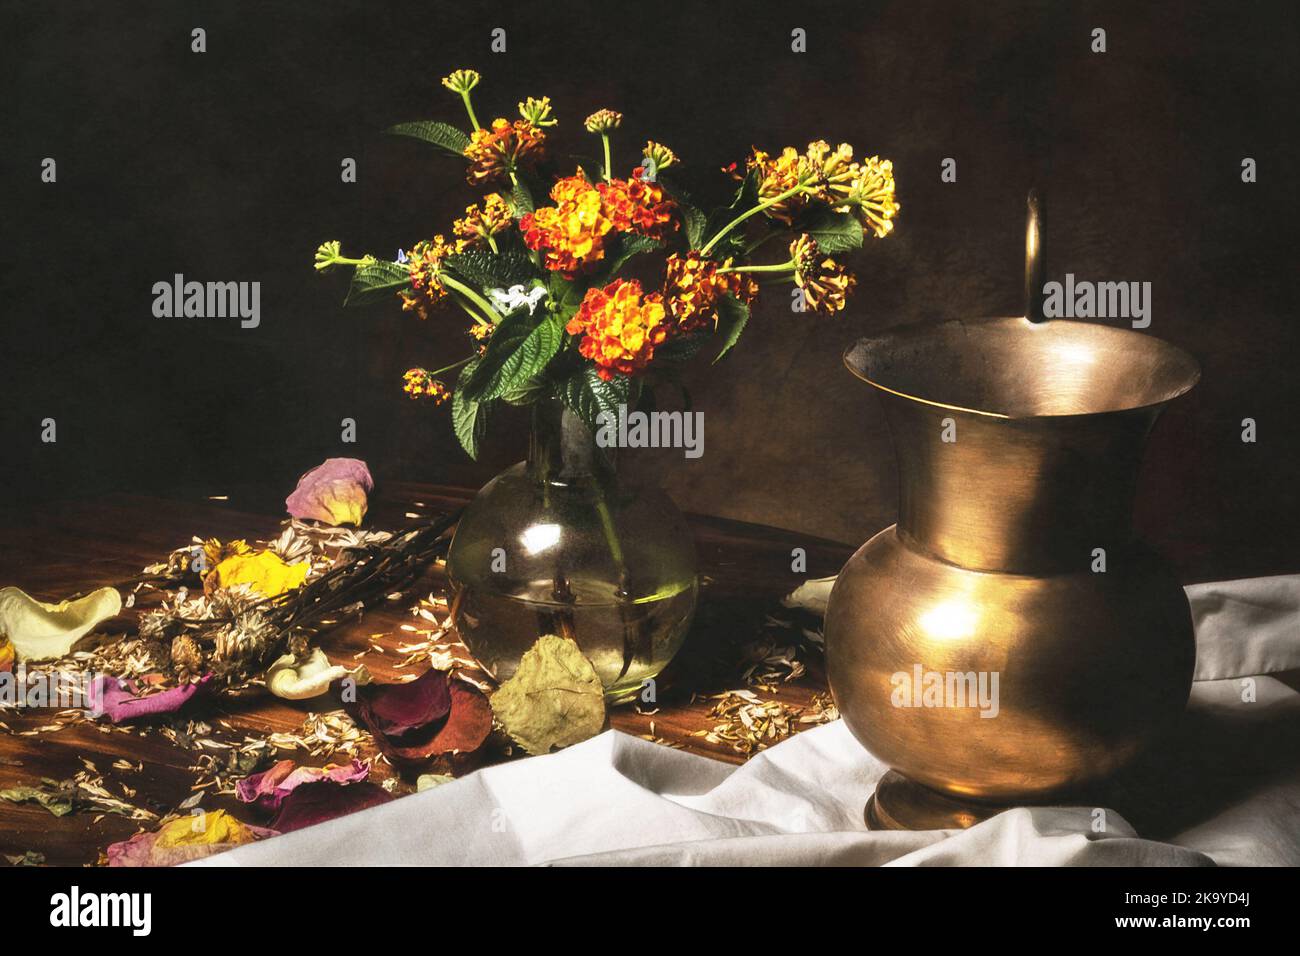 Bodegón de cacharro de bronce, flores secas y frescas. Stock Photo